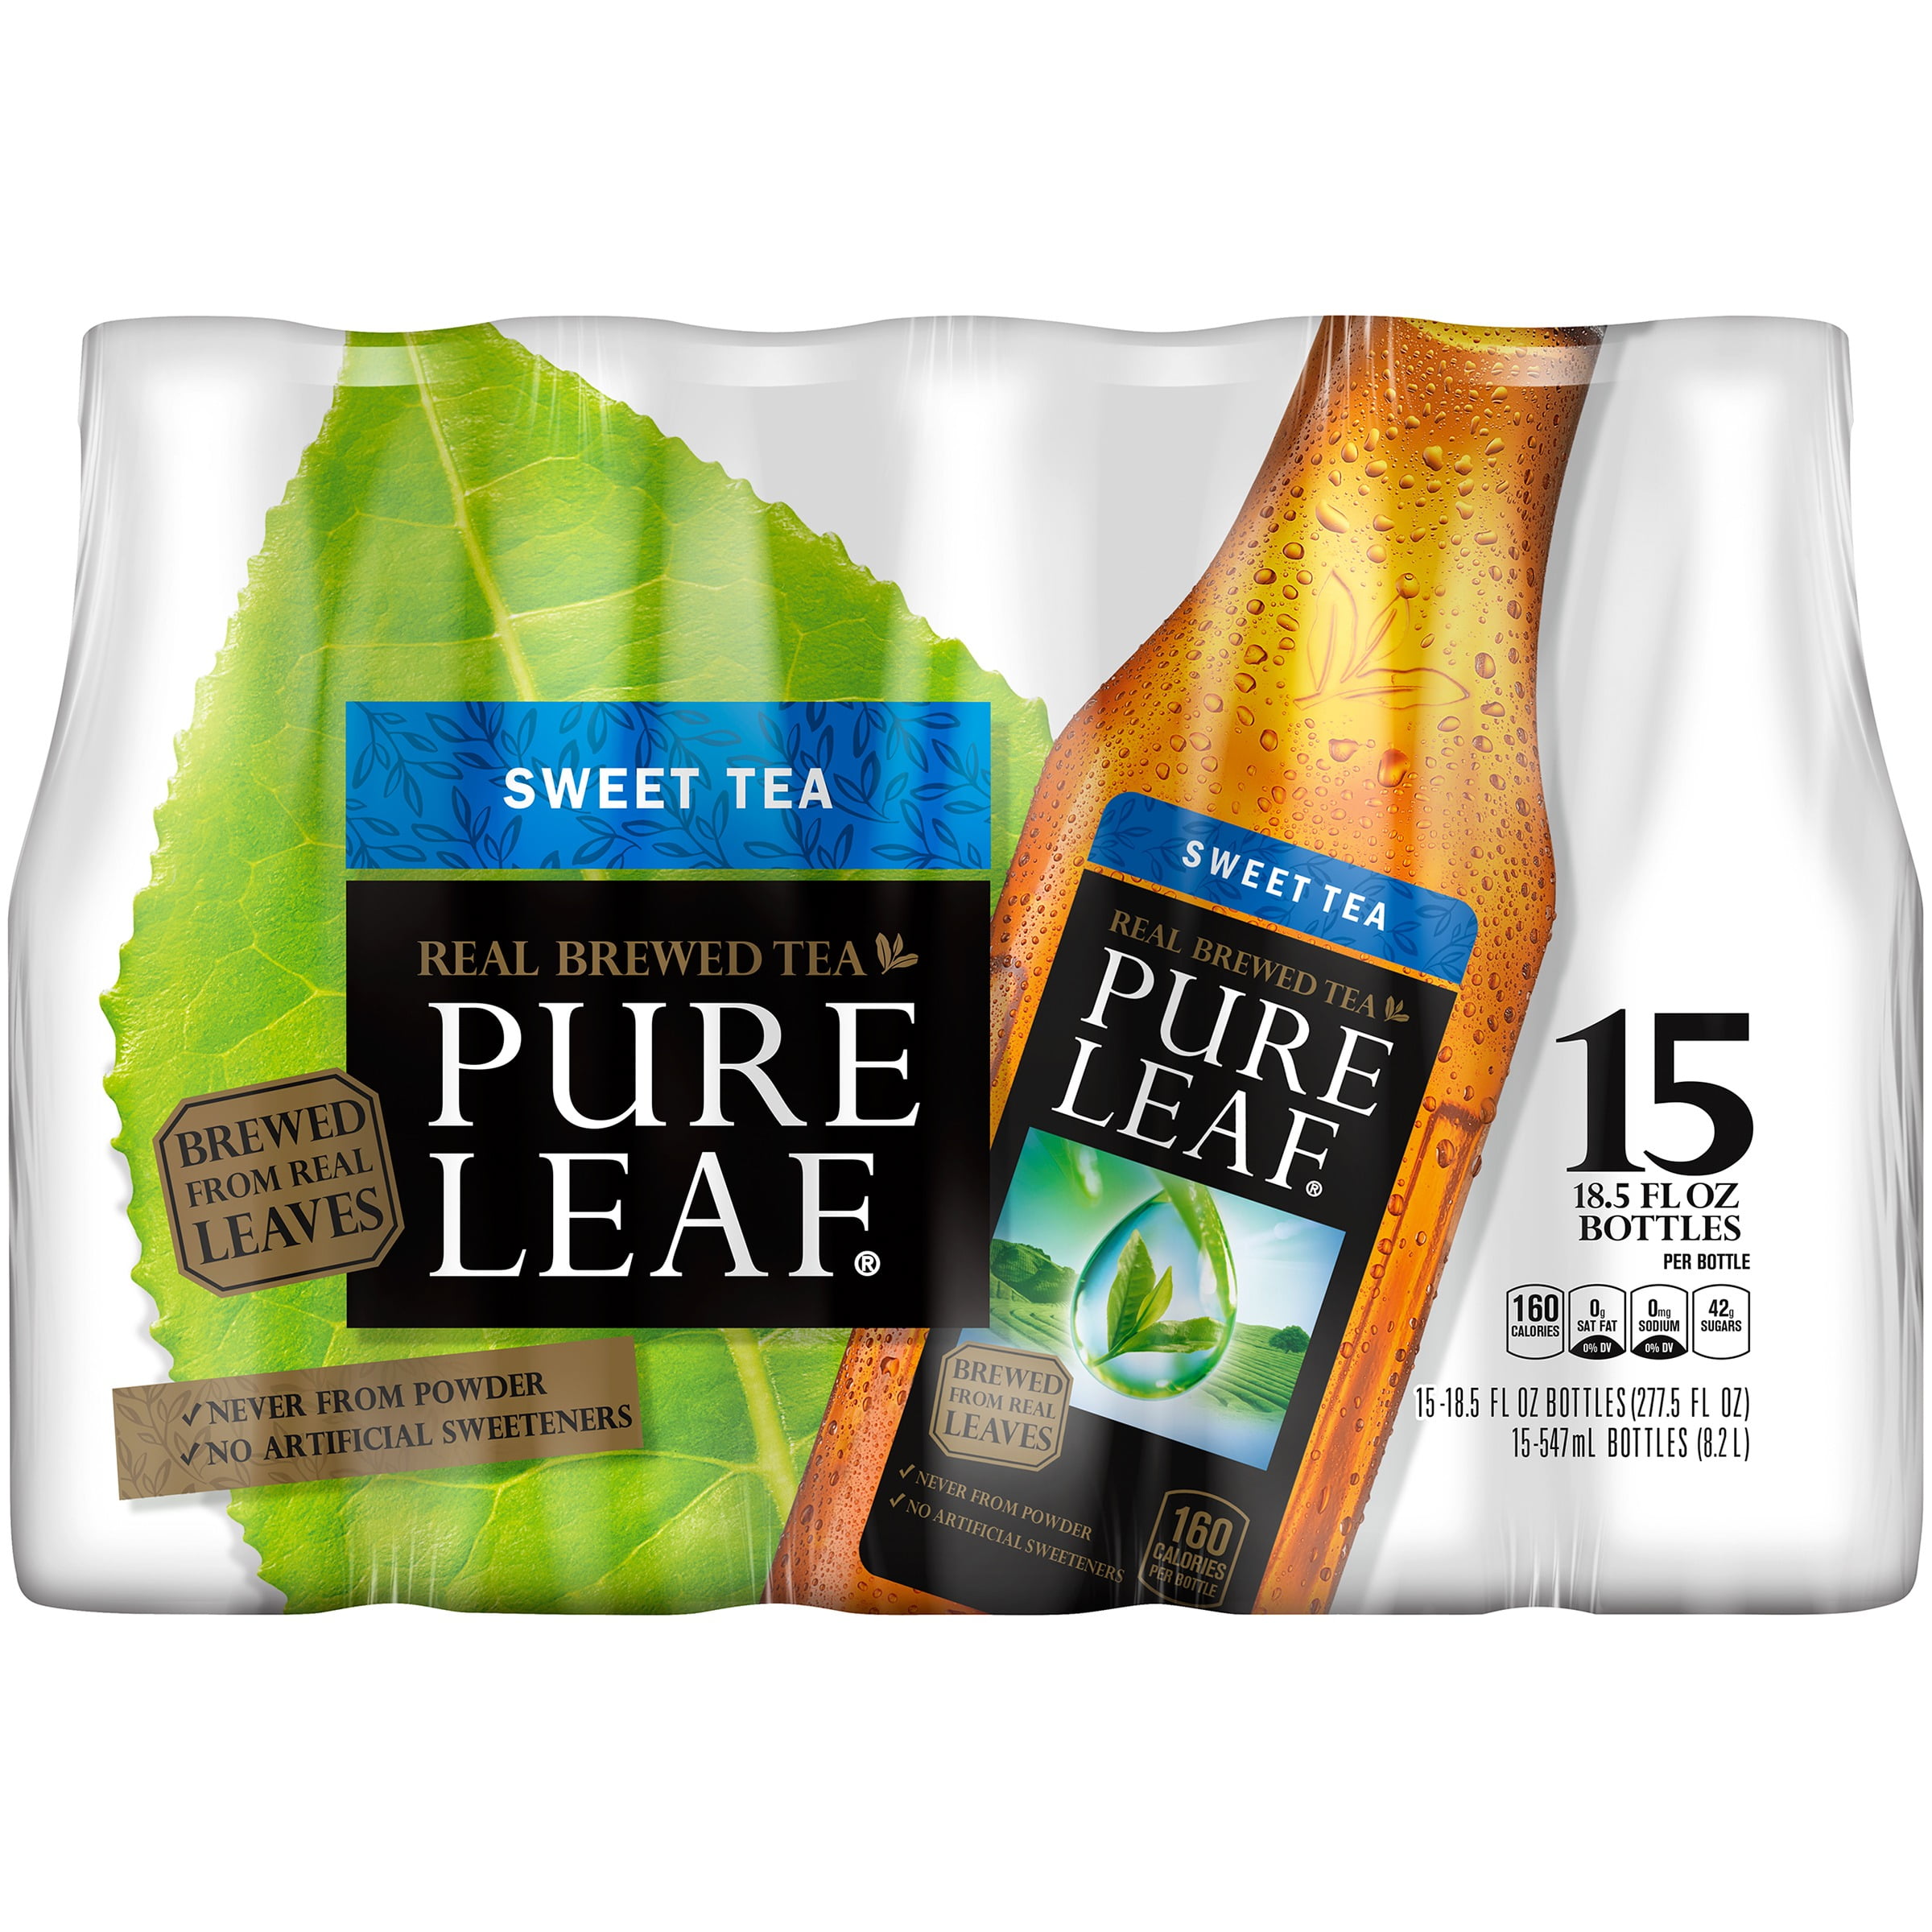 Lipton Pure Leaf Sweet Tea 1518.5 fl. oz. Pack